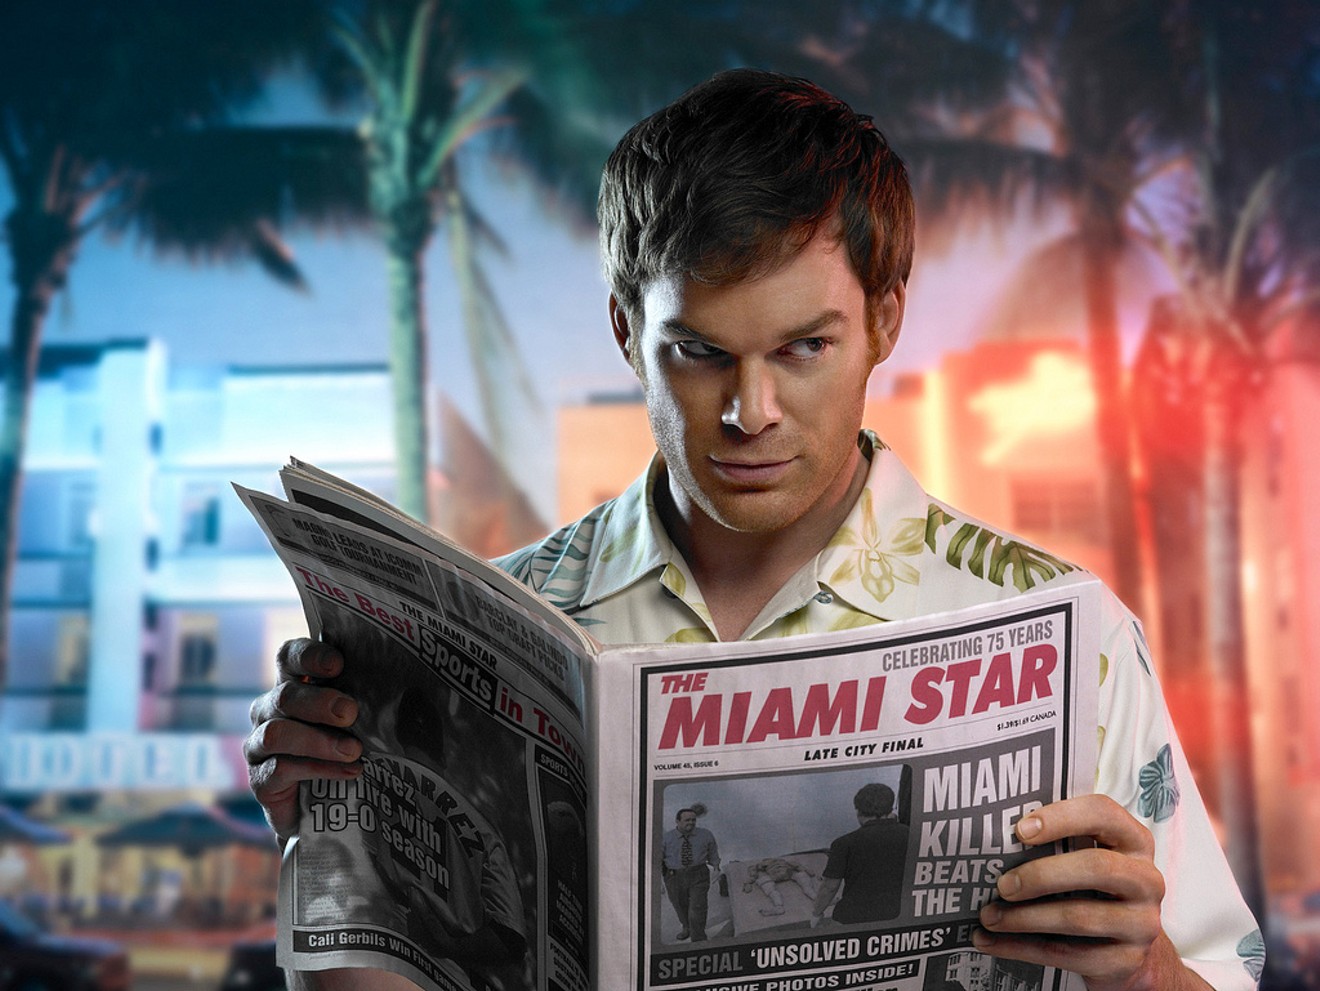 Miami resident and prolific serial killer Dexter Morgan of TV's Dexter.